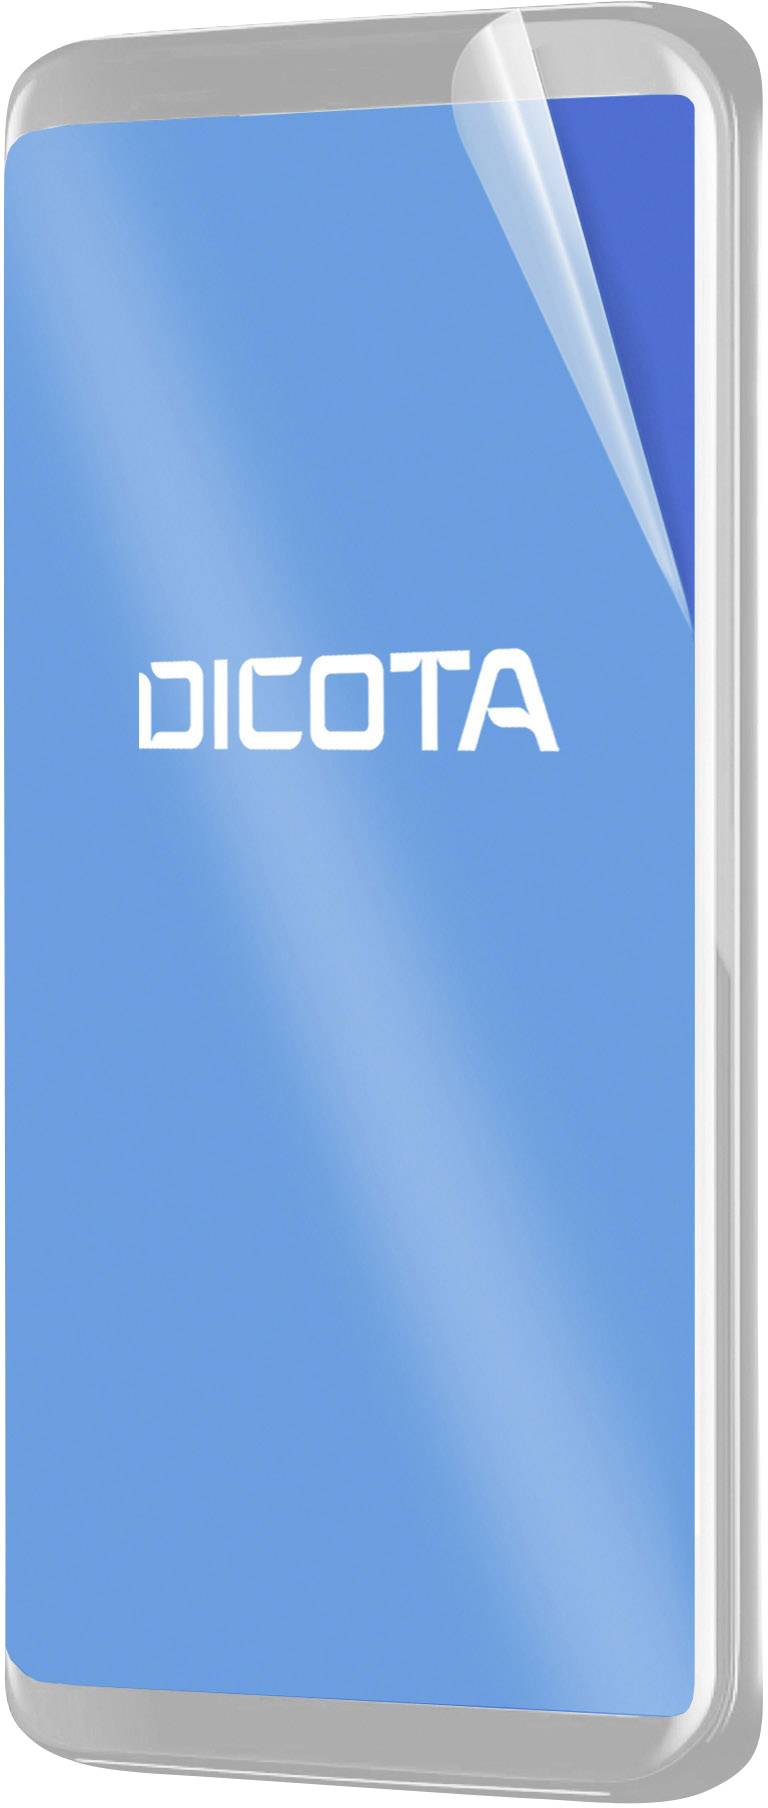 DICOTA Anti-Glare Filter 9H for iPhone xr, self-adhesive